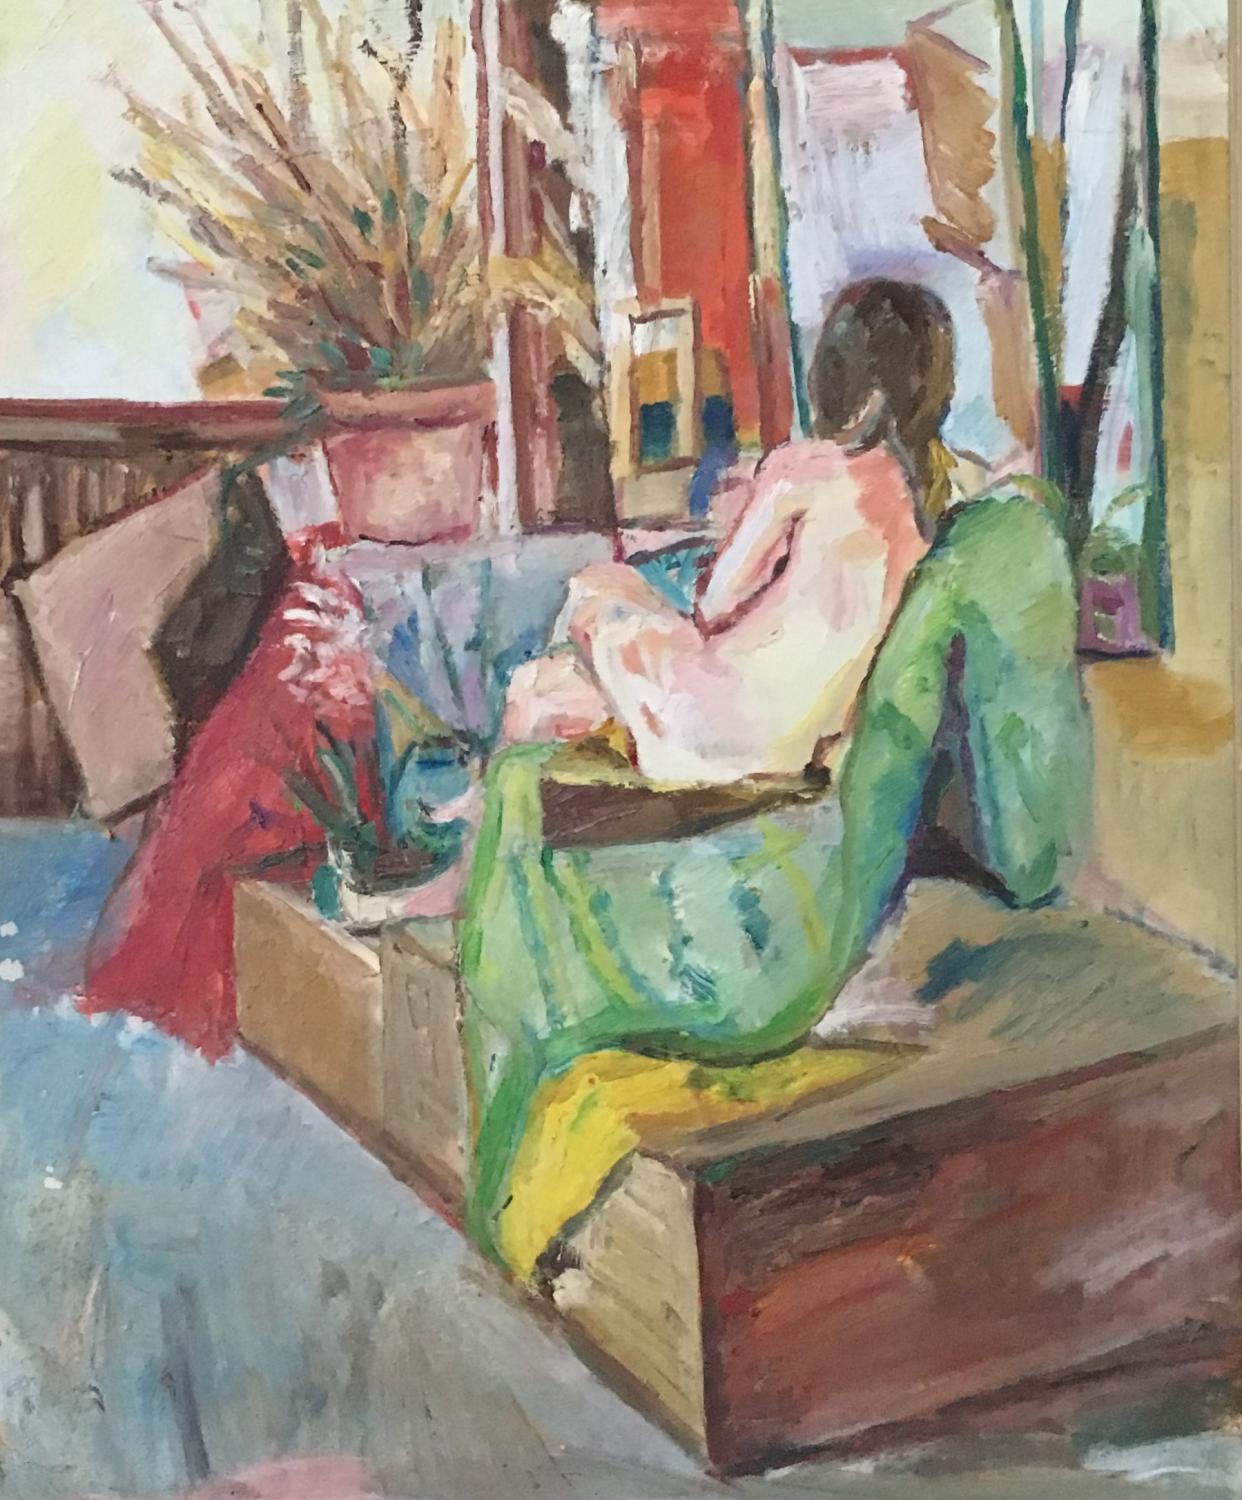 Seated Nude by Nicolas Gage